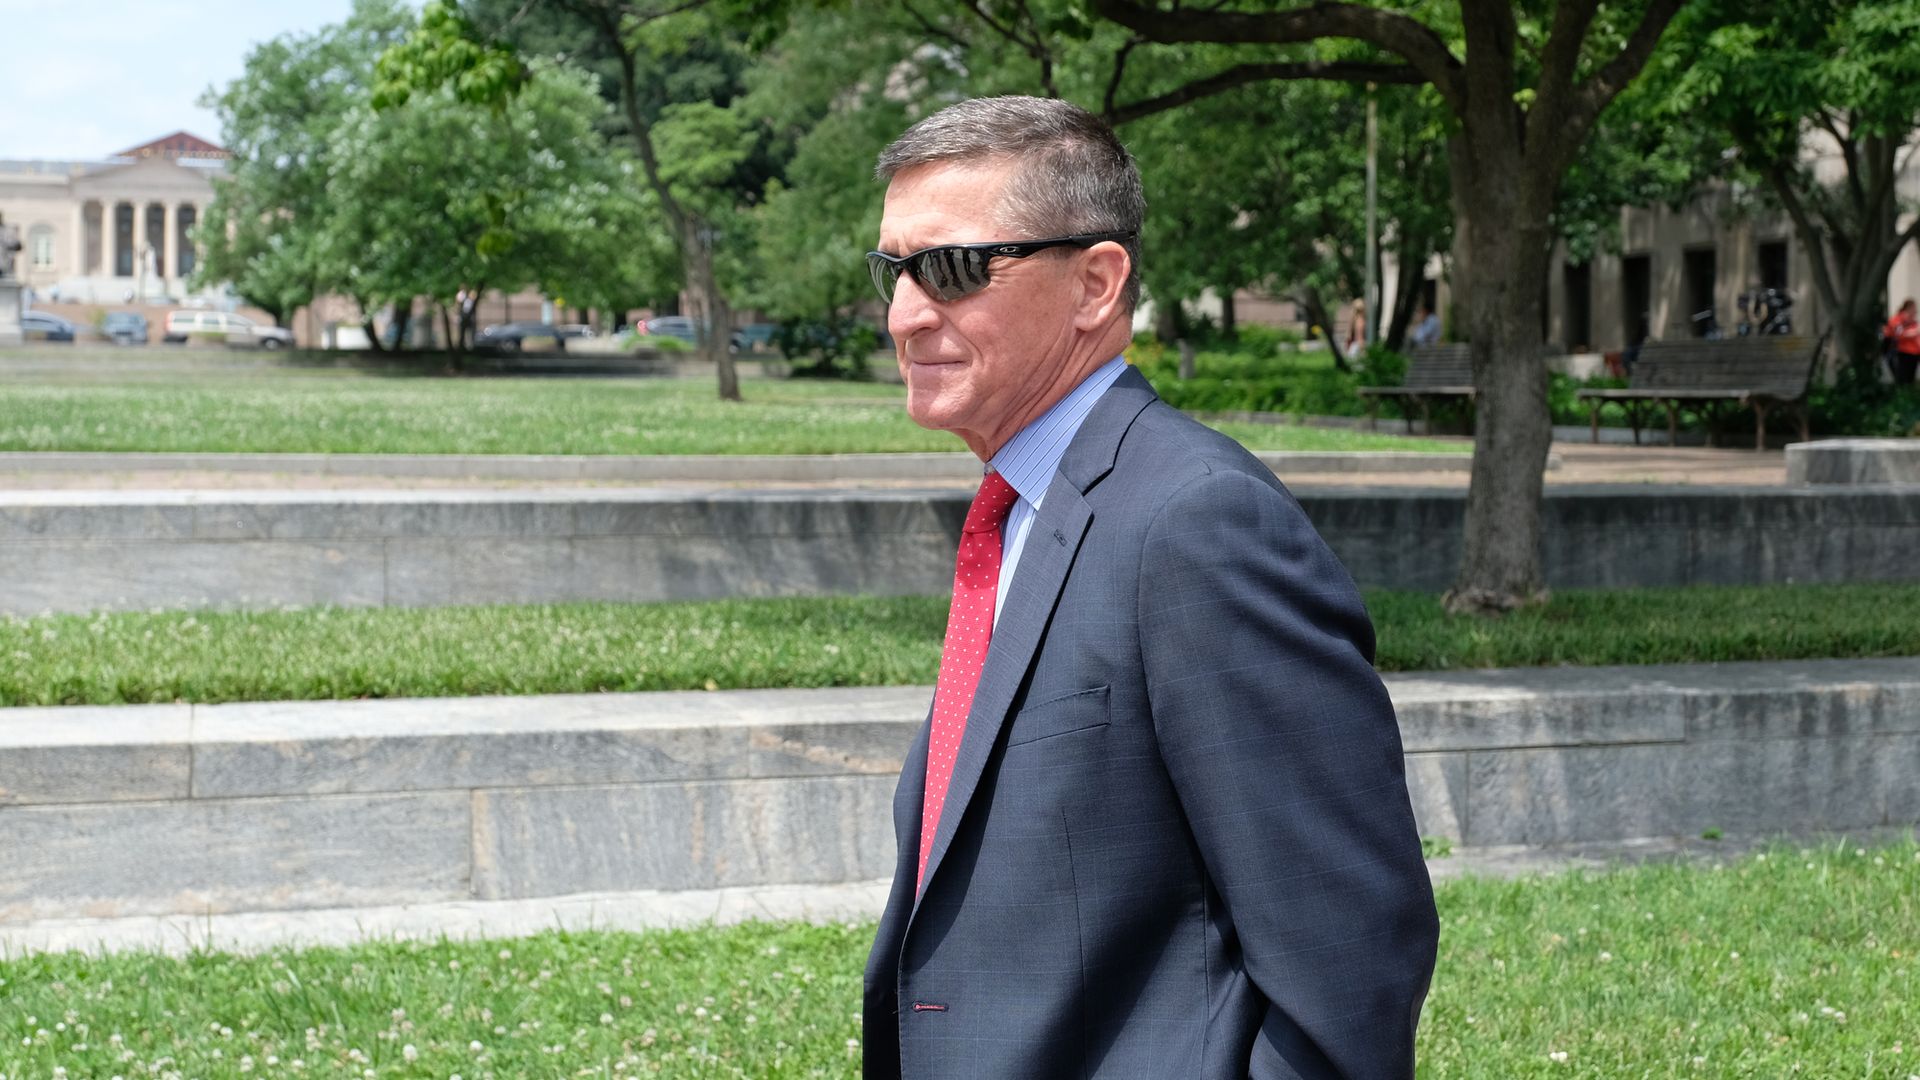 President Donald Trump’s former National Security Adviser Michael Flynn leaves the E. Barrett Prettyman U.S. Courthouse on June 24, 2019 in Washington, DC. 